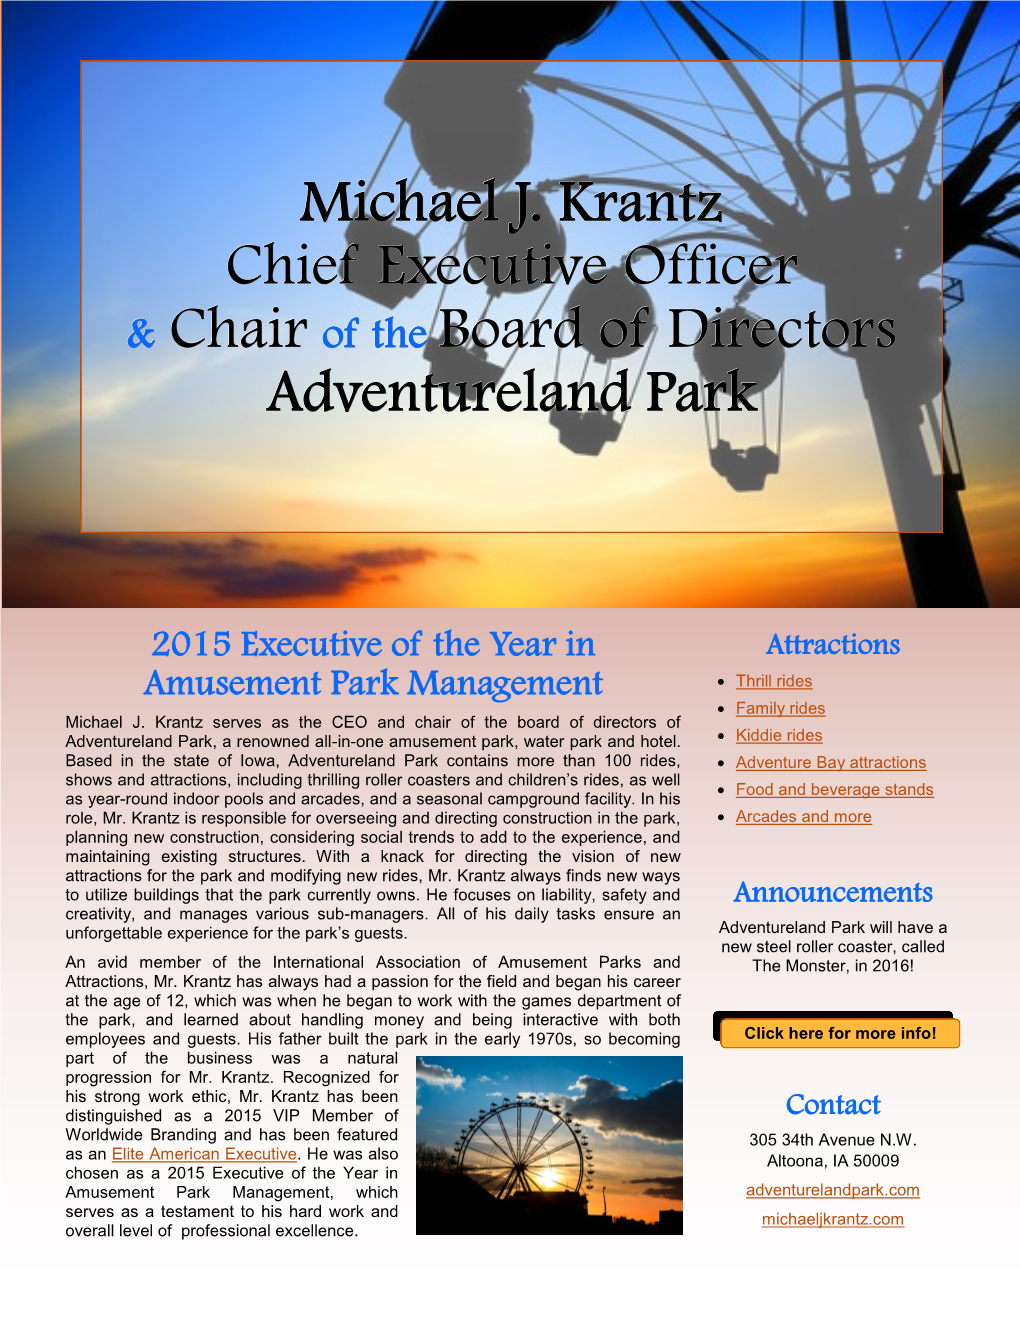 Michael J. Krantz Chief Executive Officer & Chair of the Board of Directors Adventureland Park